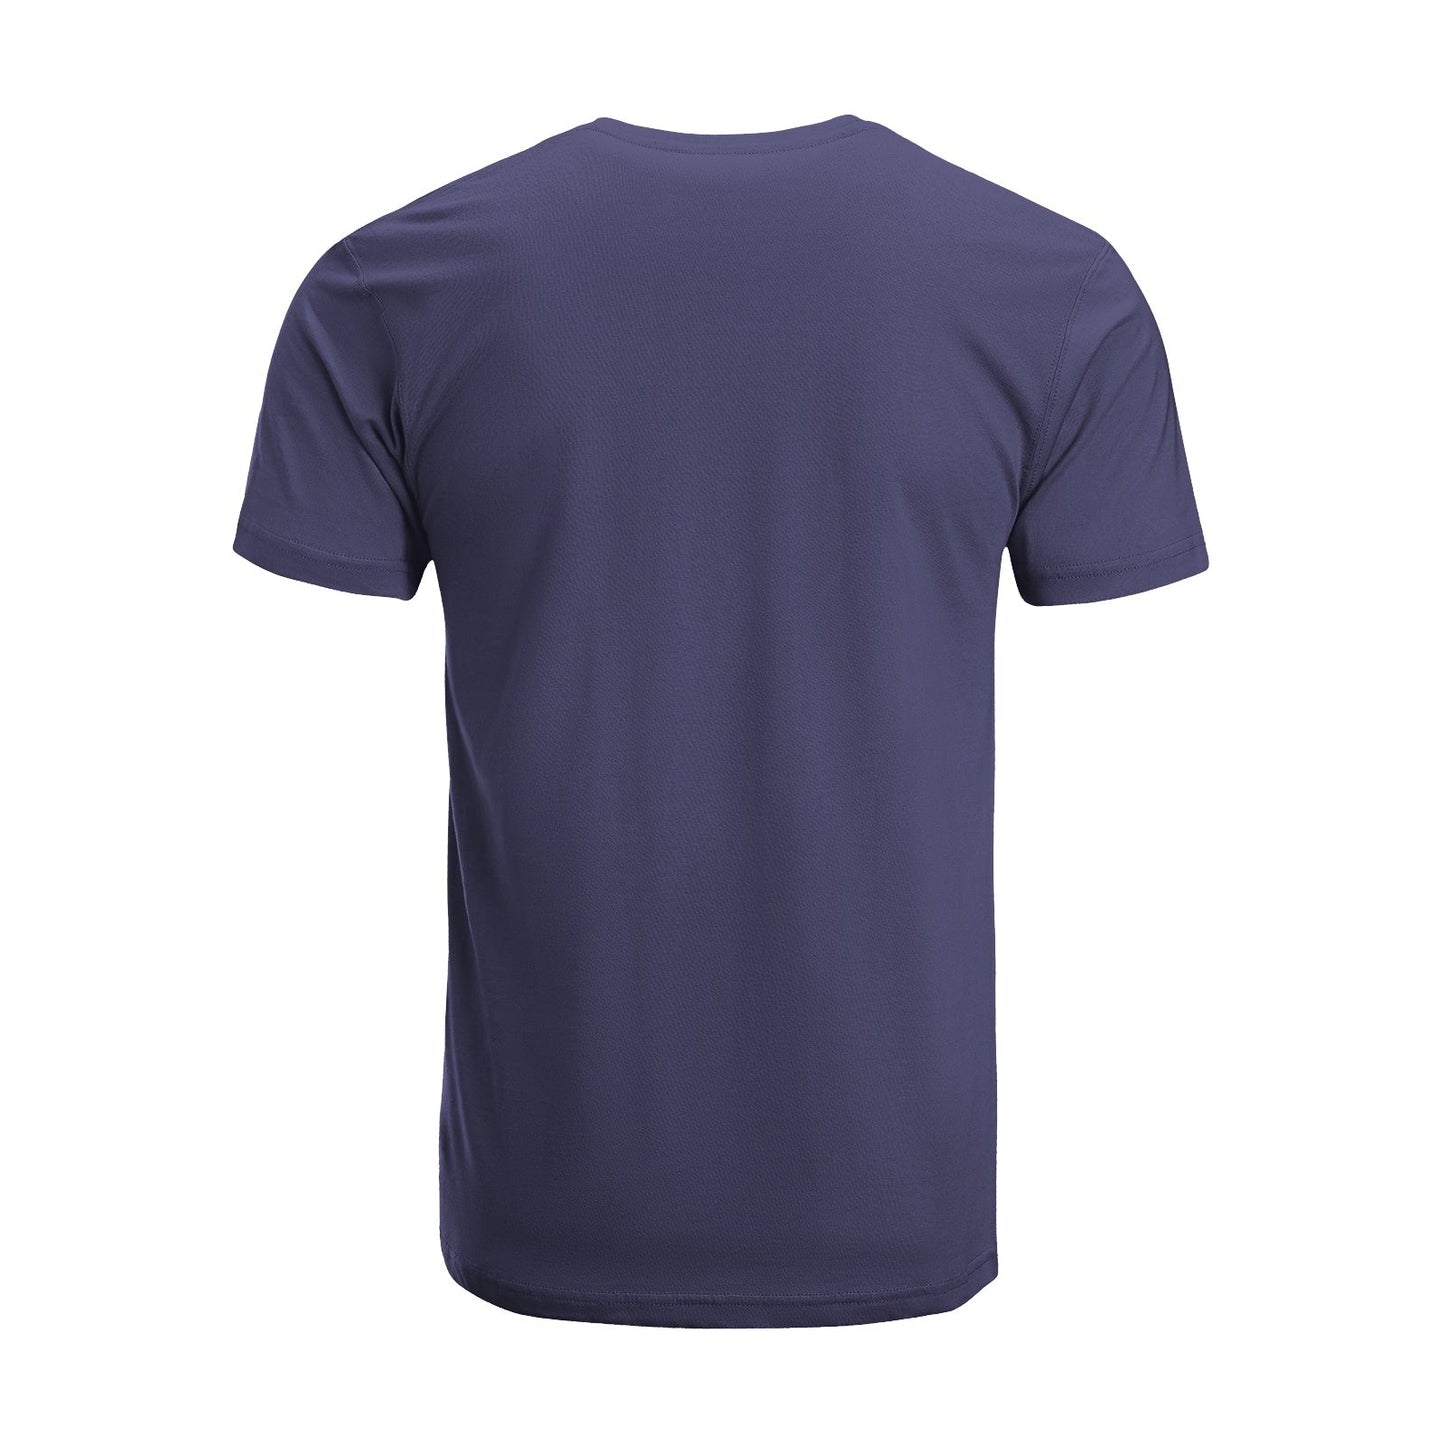 Unisex Short Sleeve Crew Neck Cotton Jersey T-Shirt USA 12